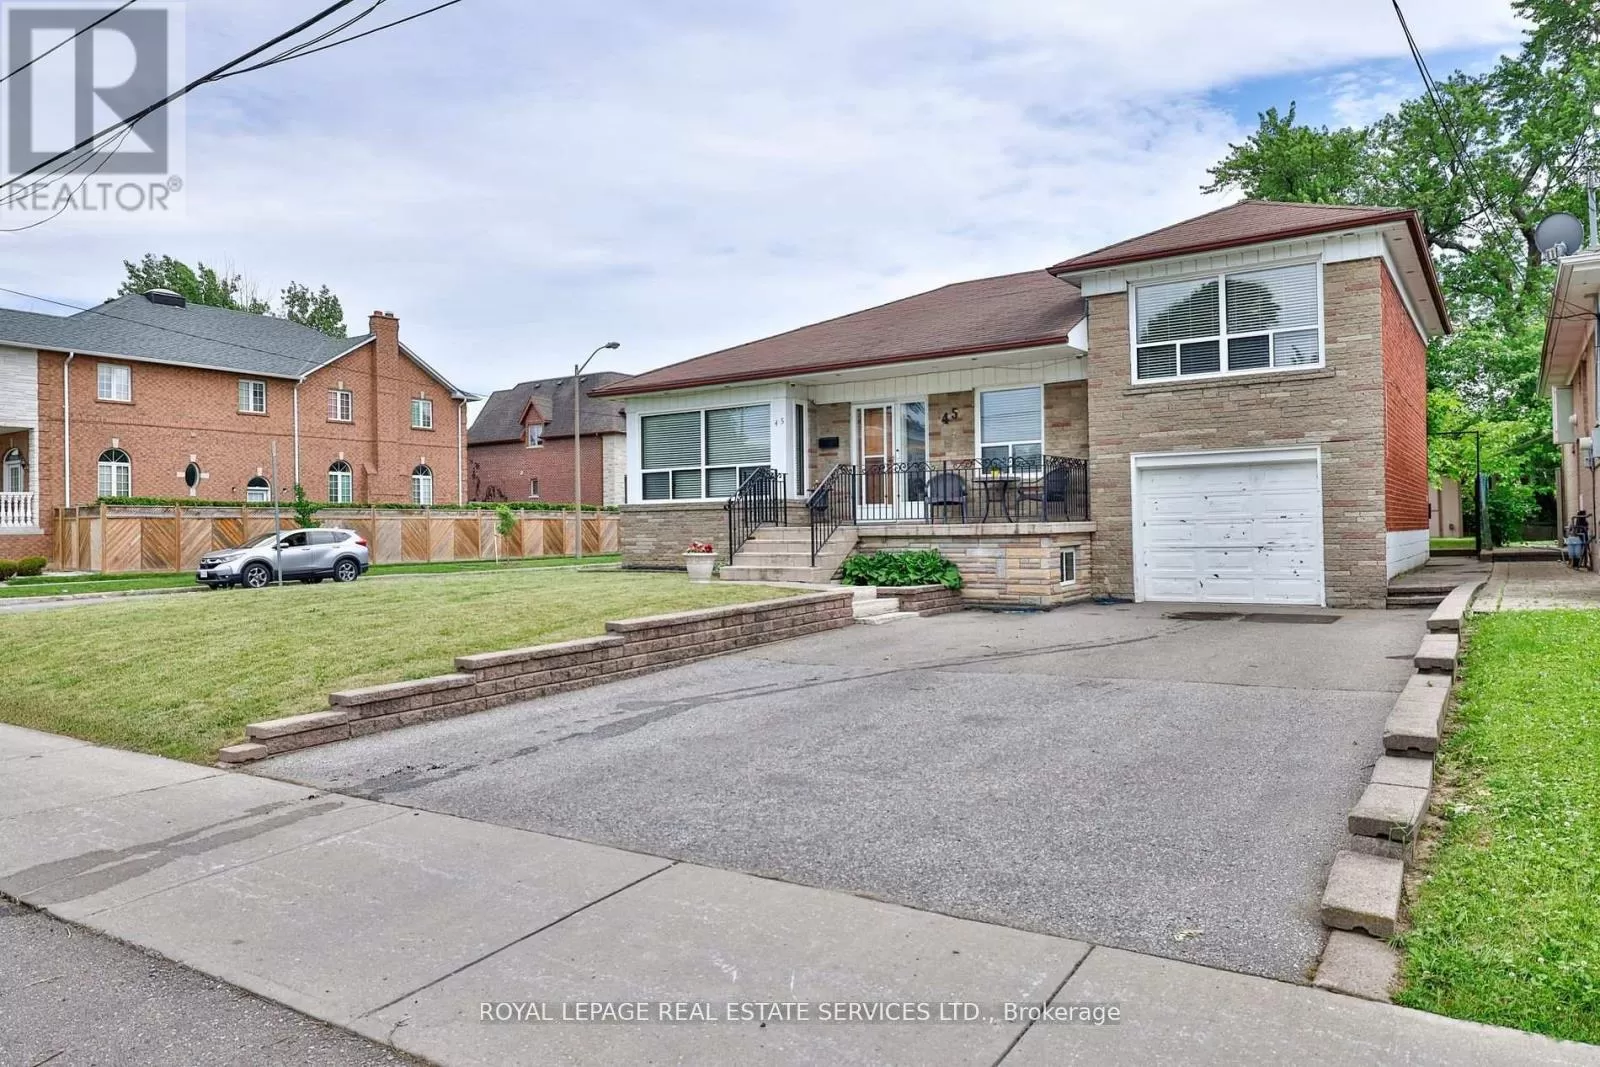 House for rent: 45 Danby Avenue, Toronto, Ontario M3H 2J4